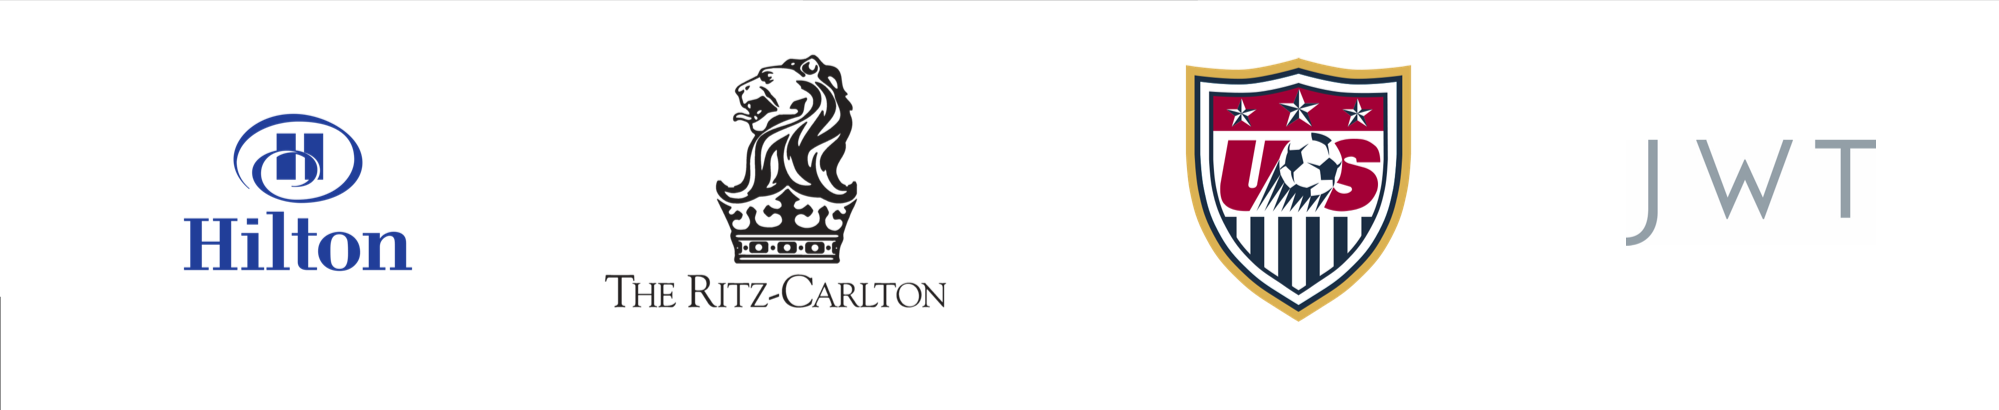 Hilton, Ritz-Carlton and JWT logos